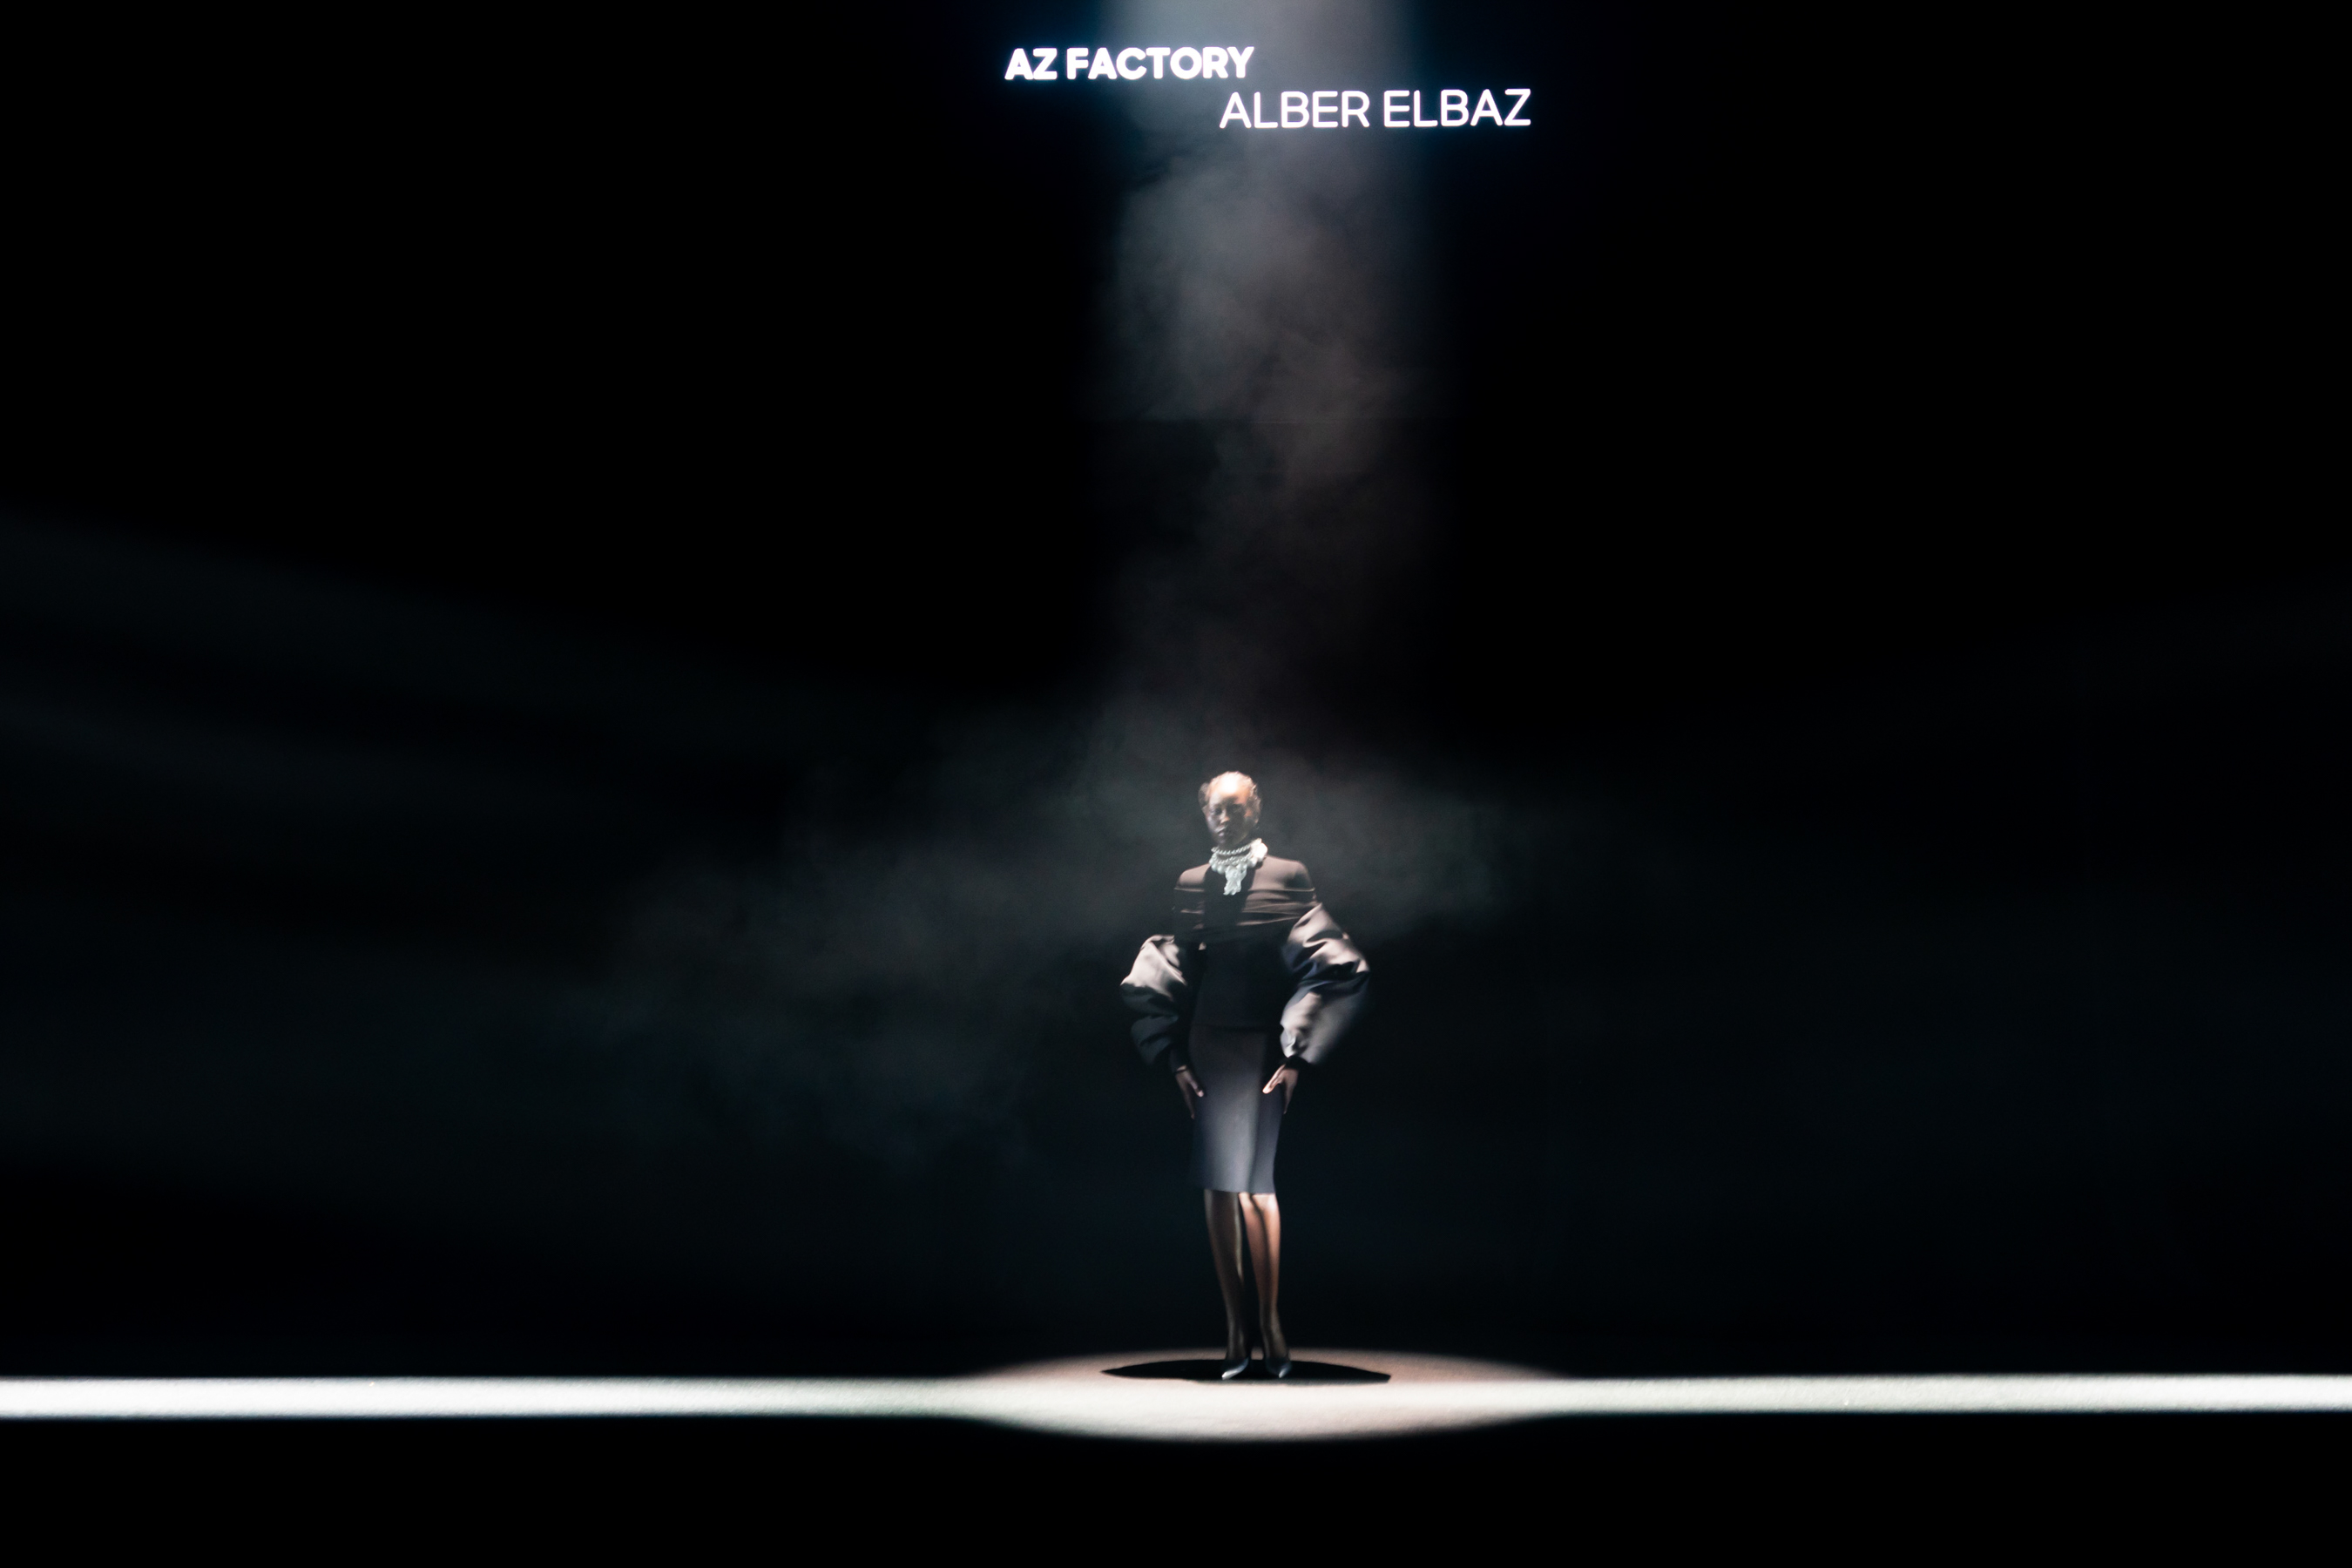 Az Factory Spring 2022 Atmosphere Fashion Show